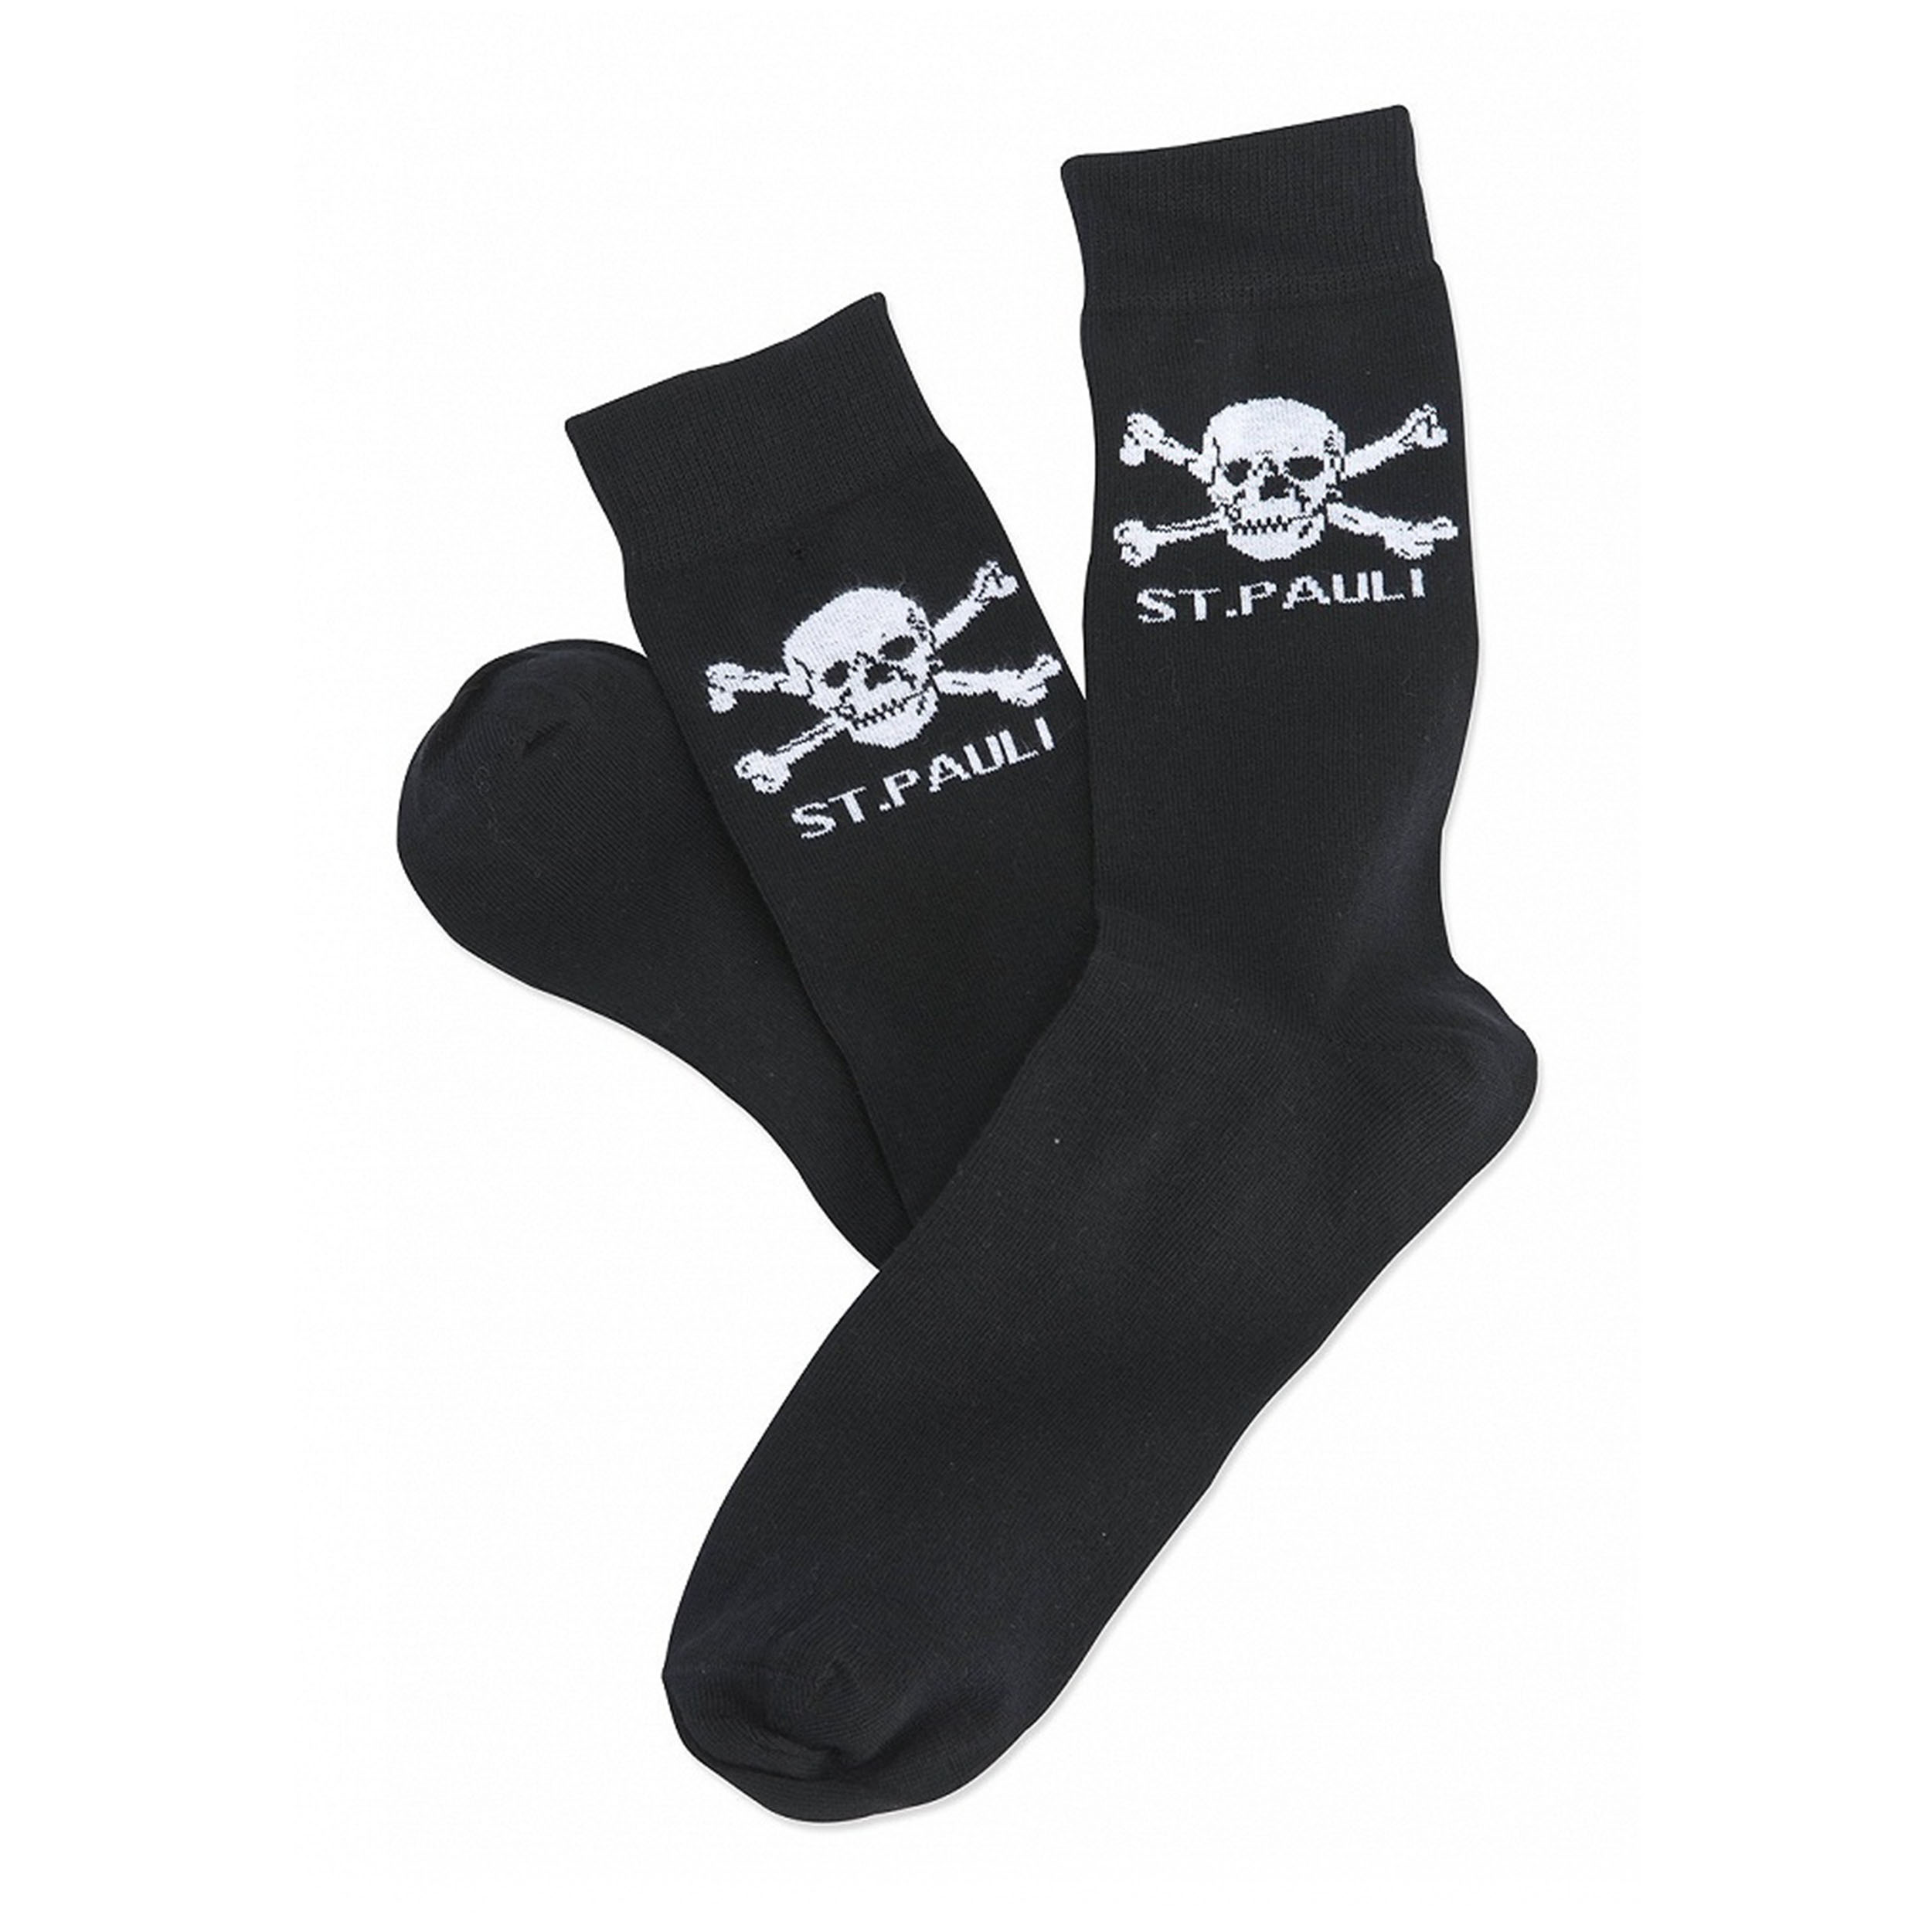 St.Pauli sokken Totenkopf zwart